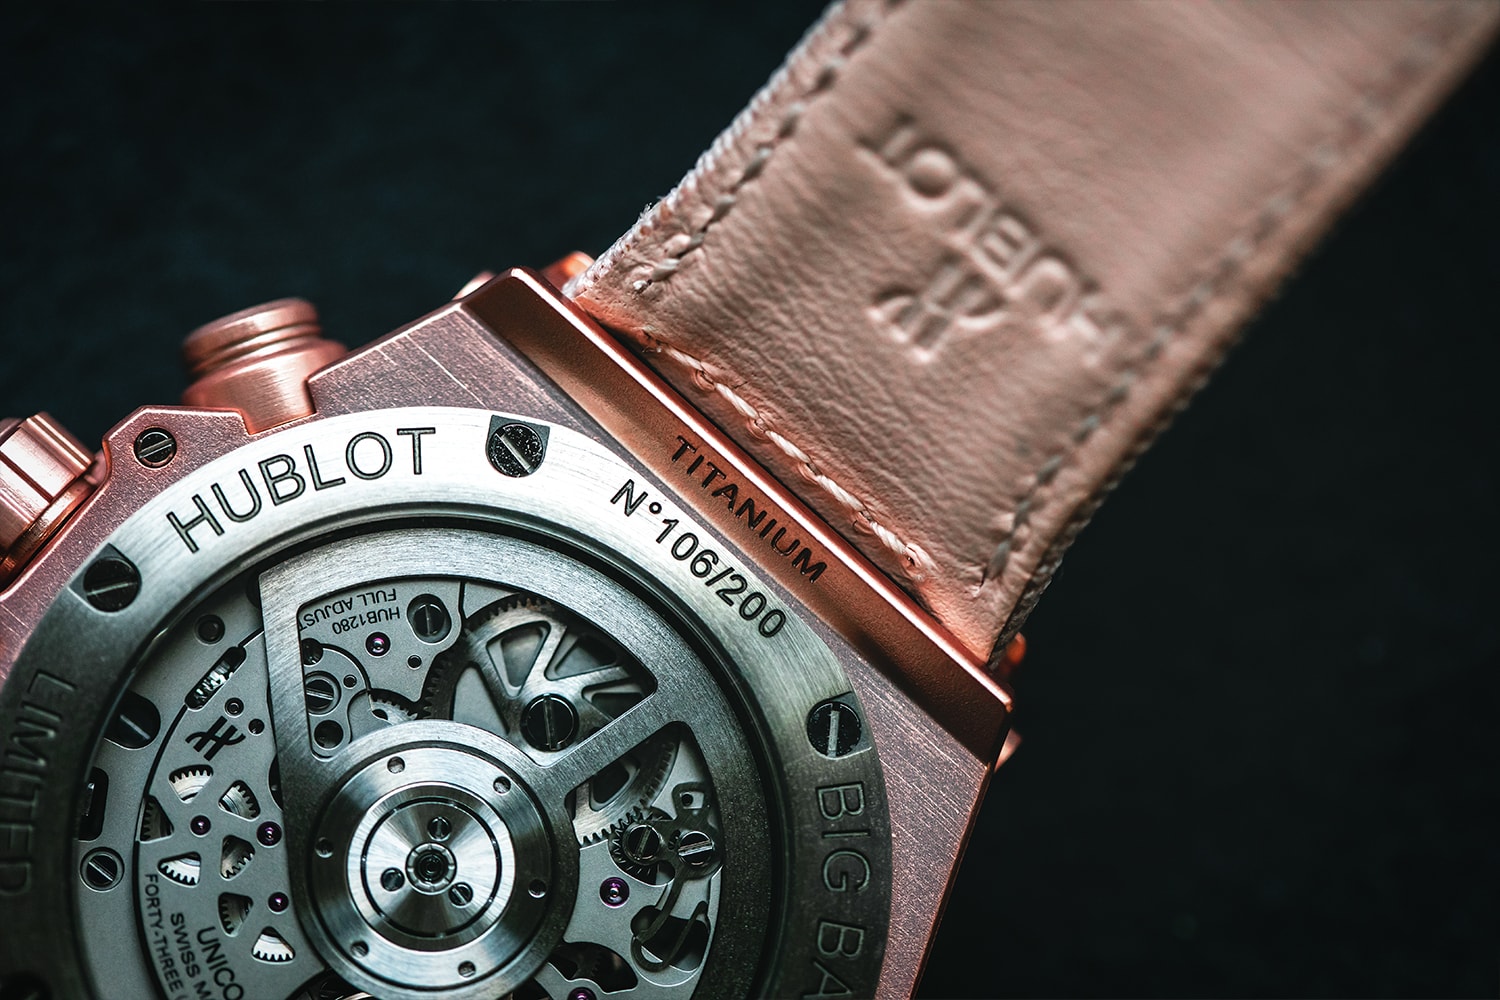 Garage Italia x Hublot Millennial Pink Big Bang Chronograph watches unico mecahnical watches luxury sports luxe timekeeping movement swiss 